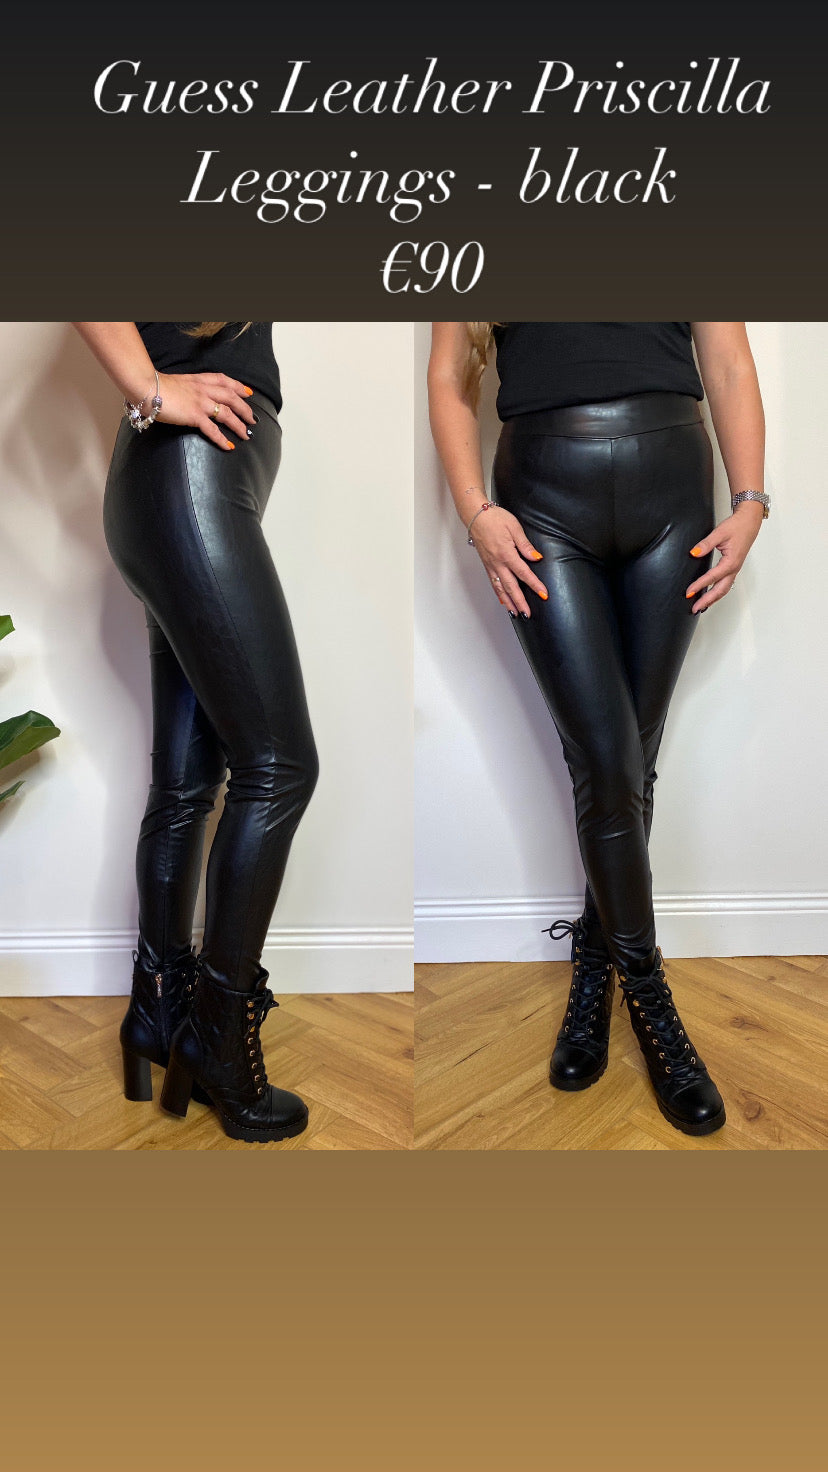 Guess Leather Priscilla Leggings - black